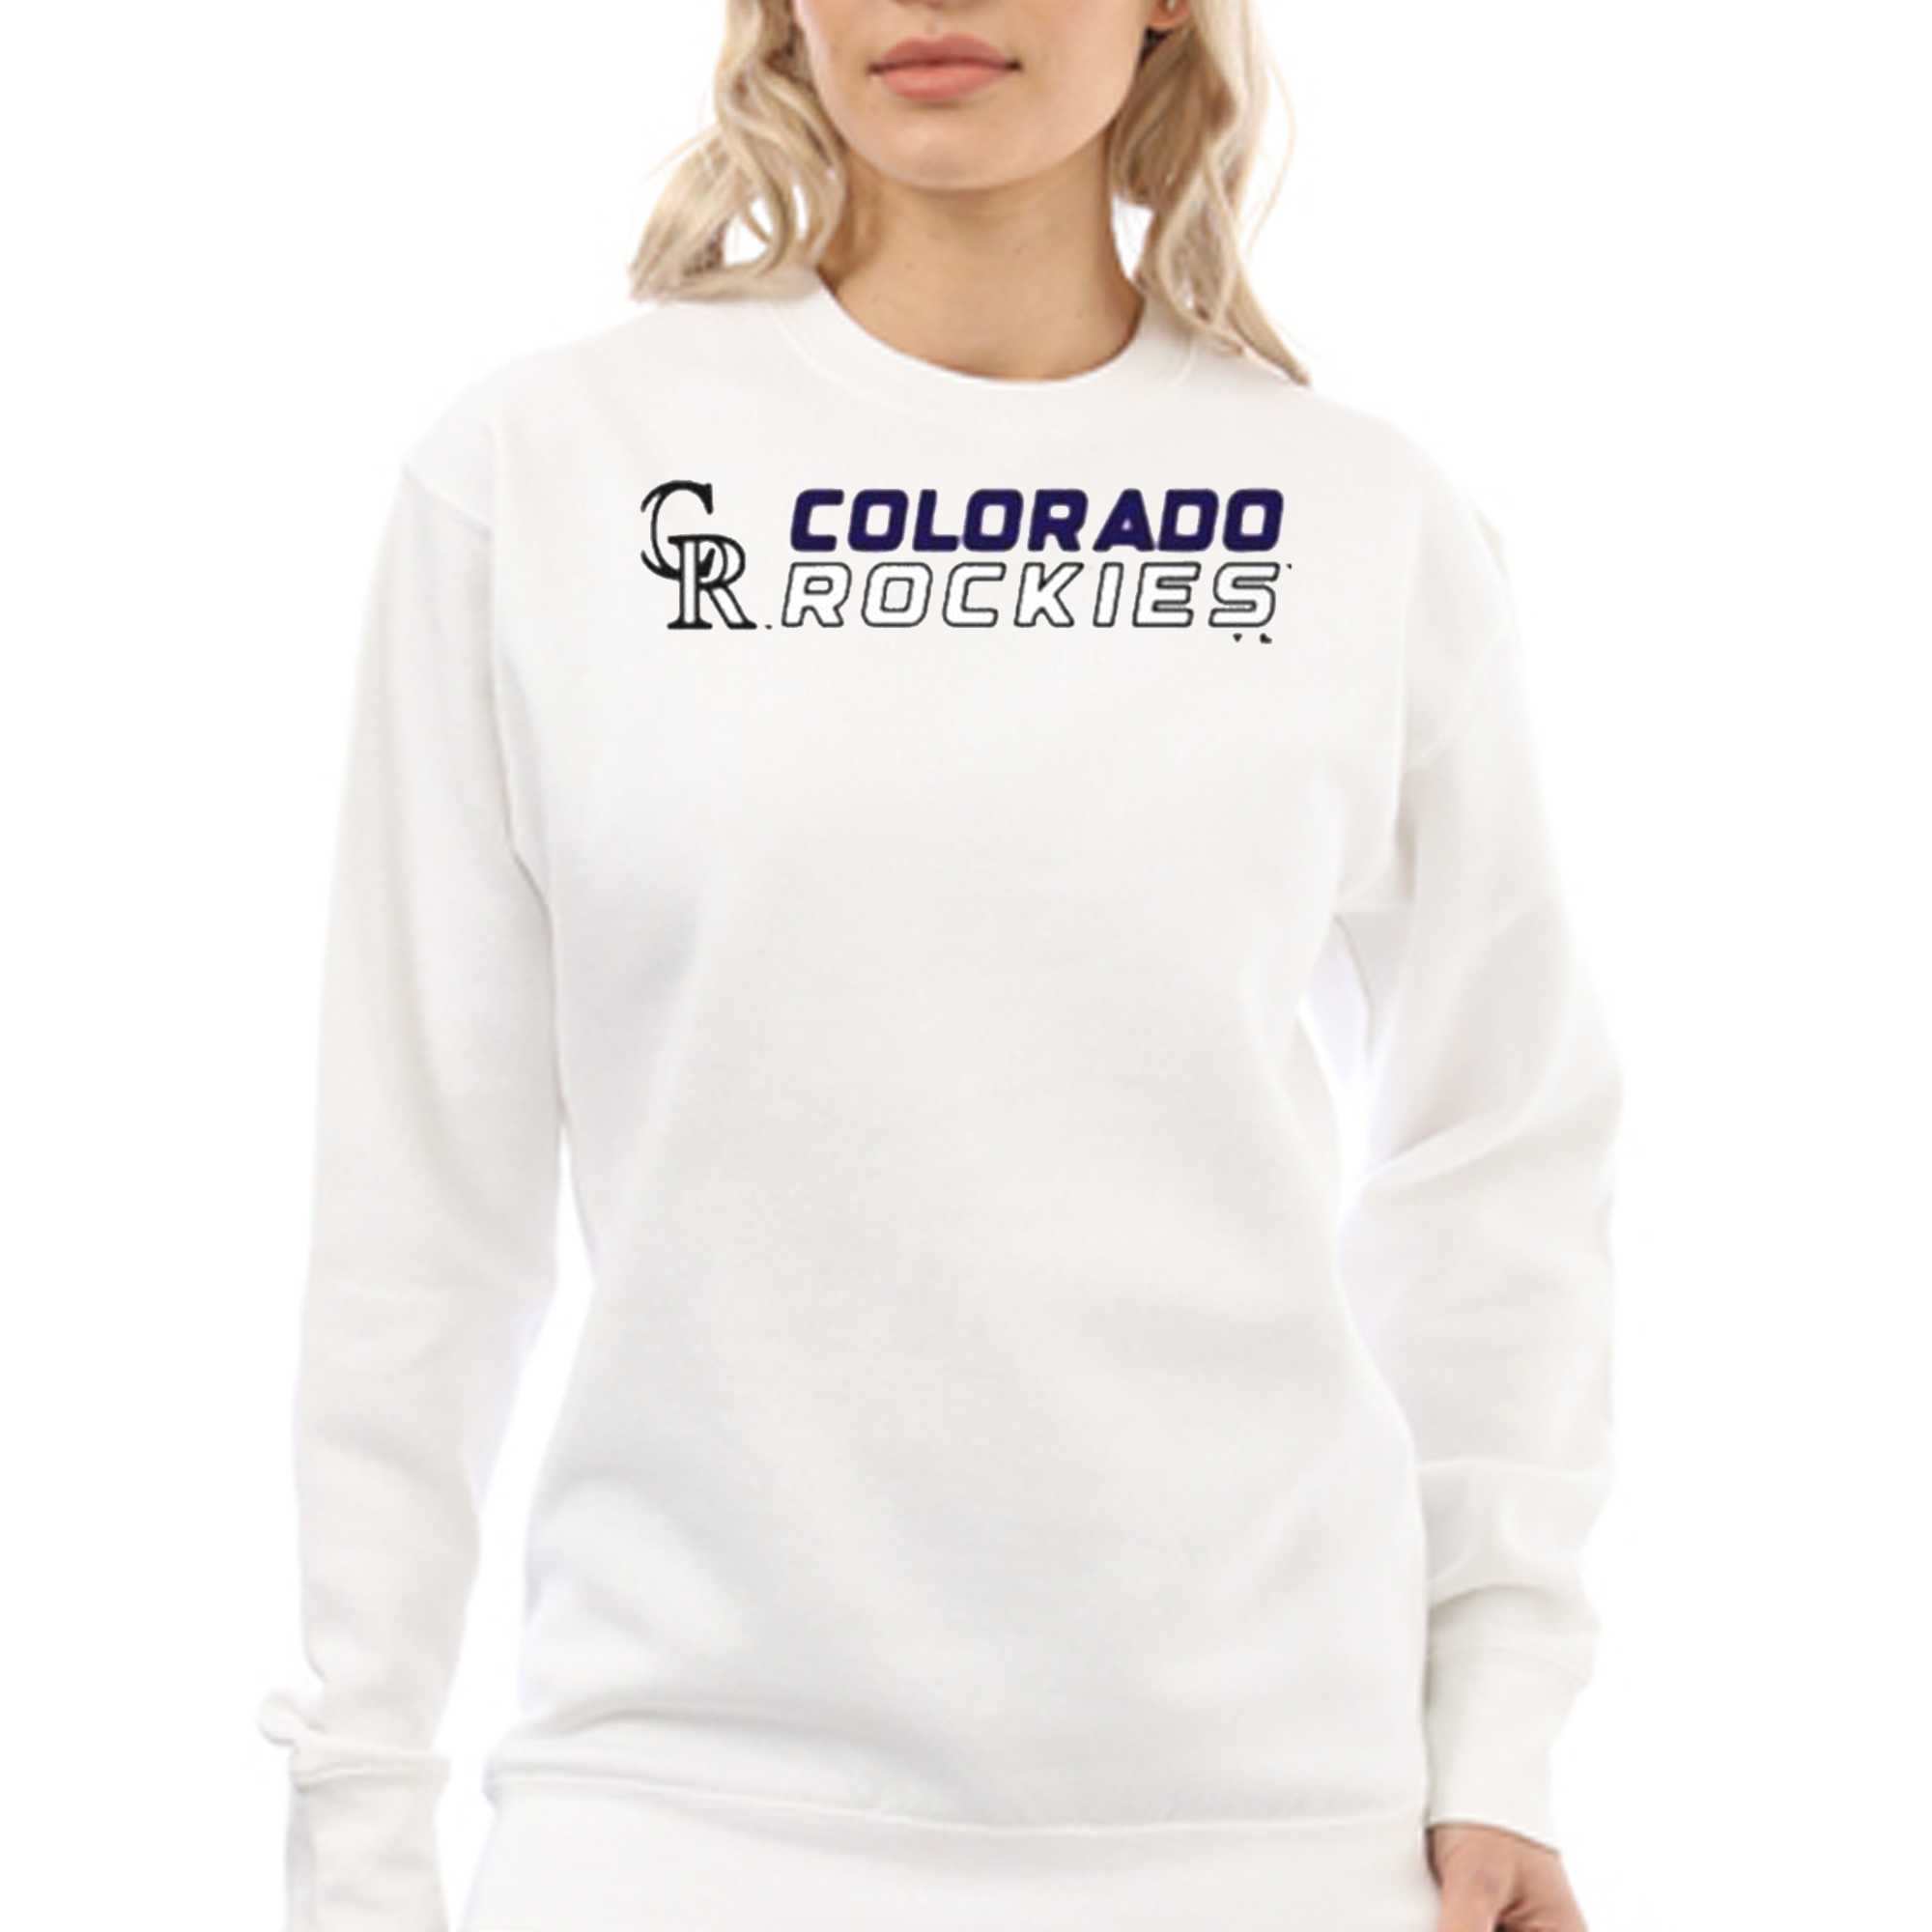 Colorado Rockies Levelwear Birch Chase Shirt - Shibtee Clothing